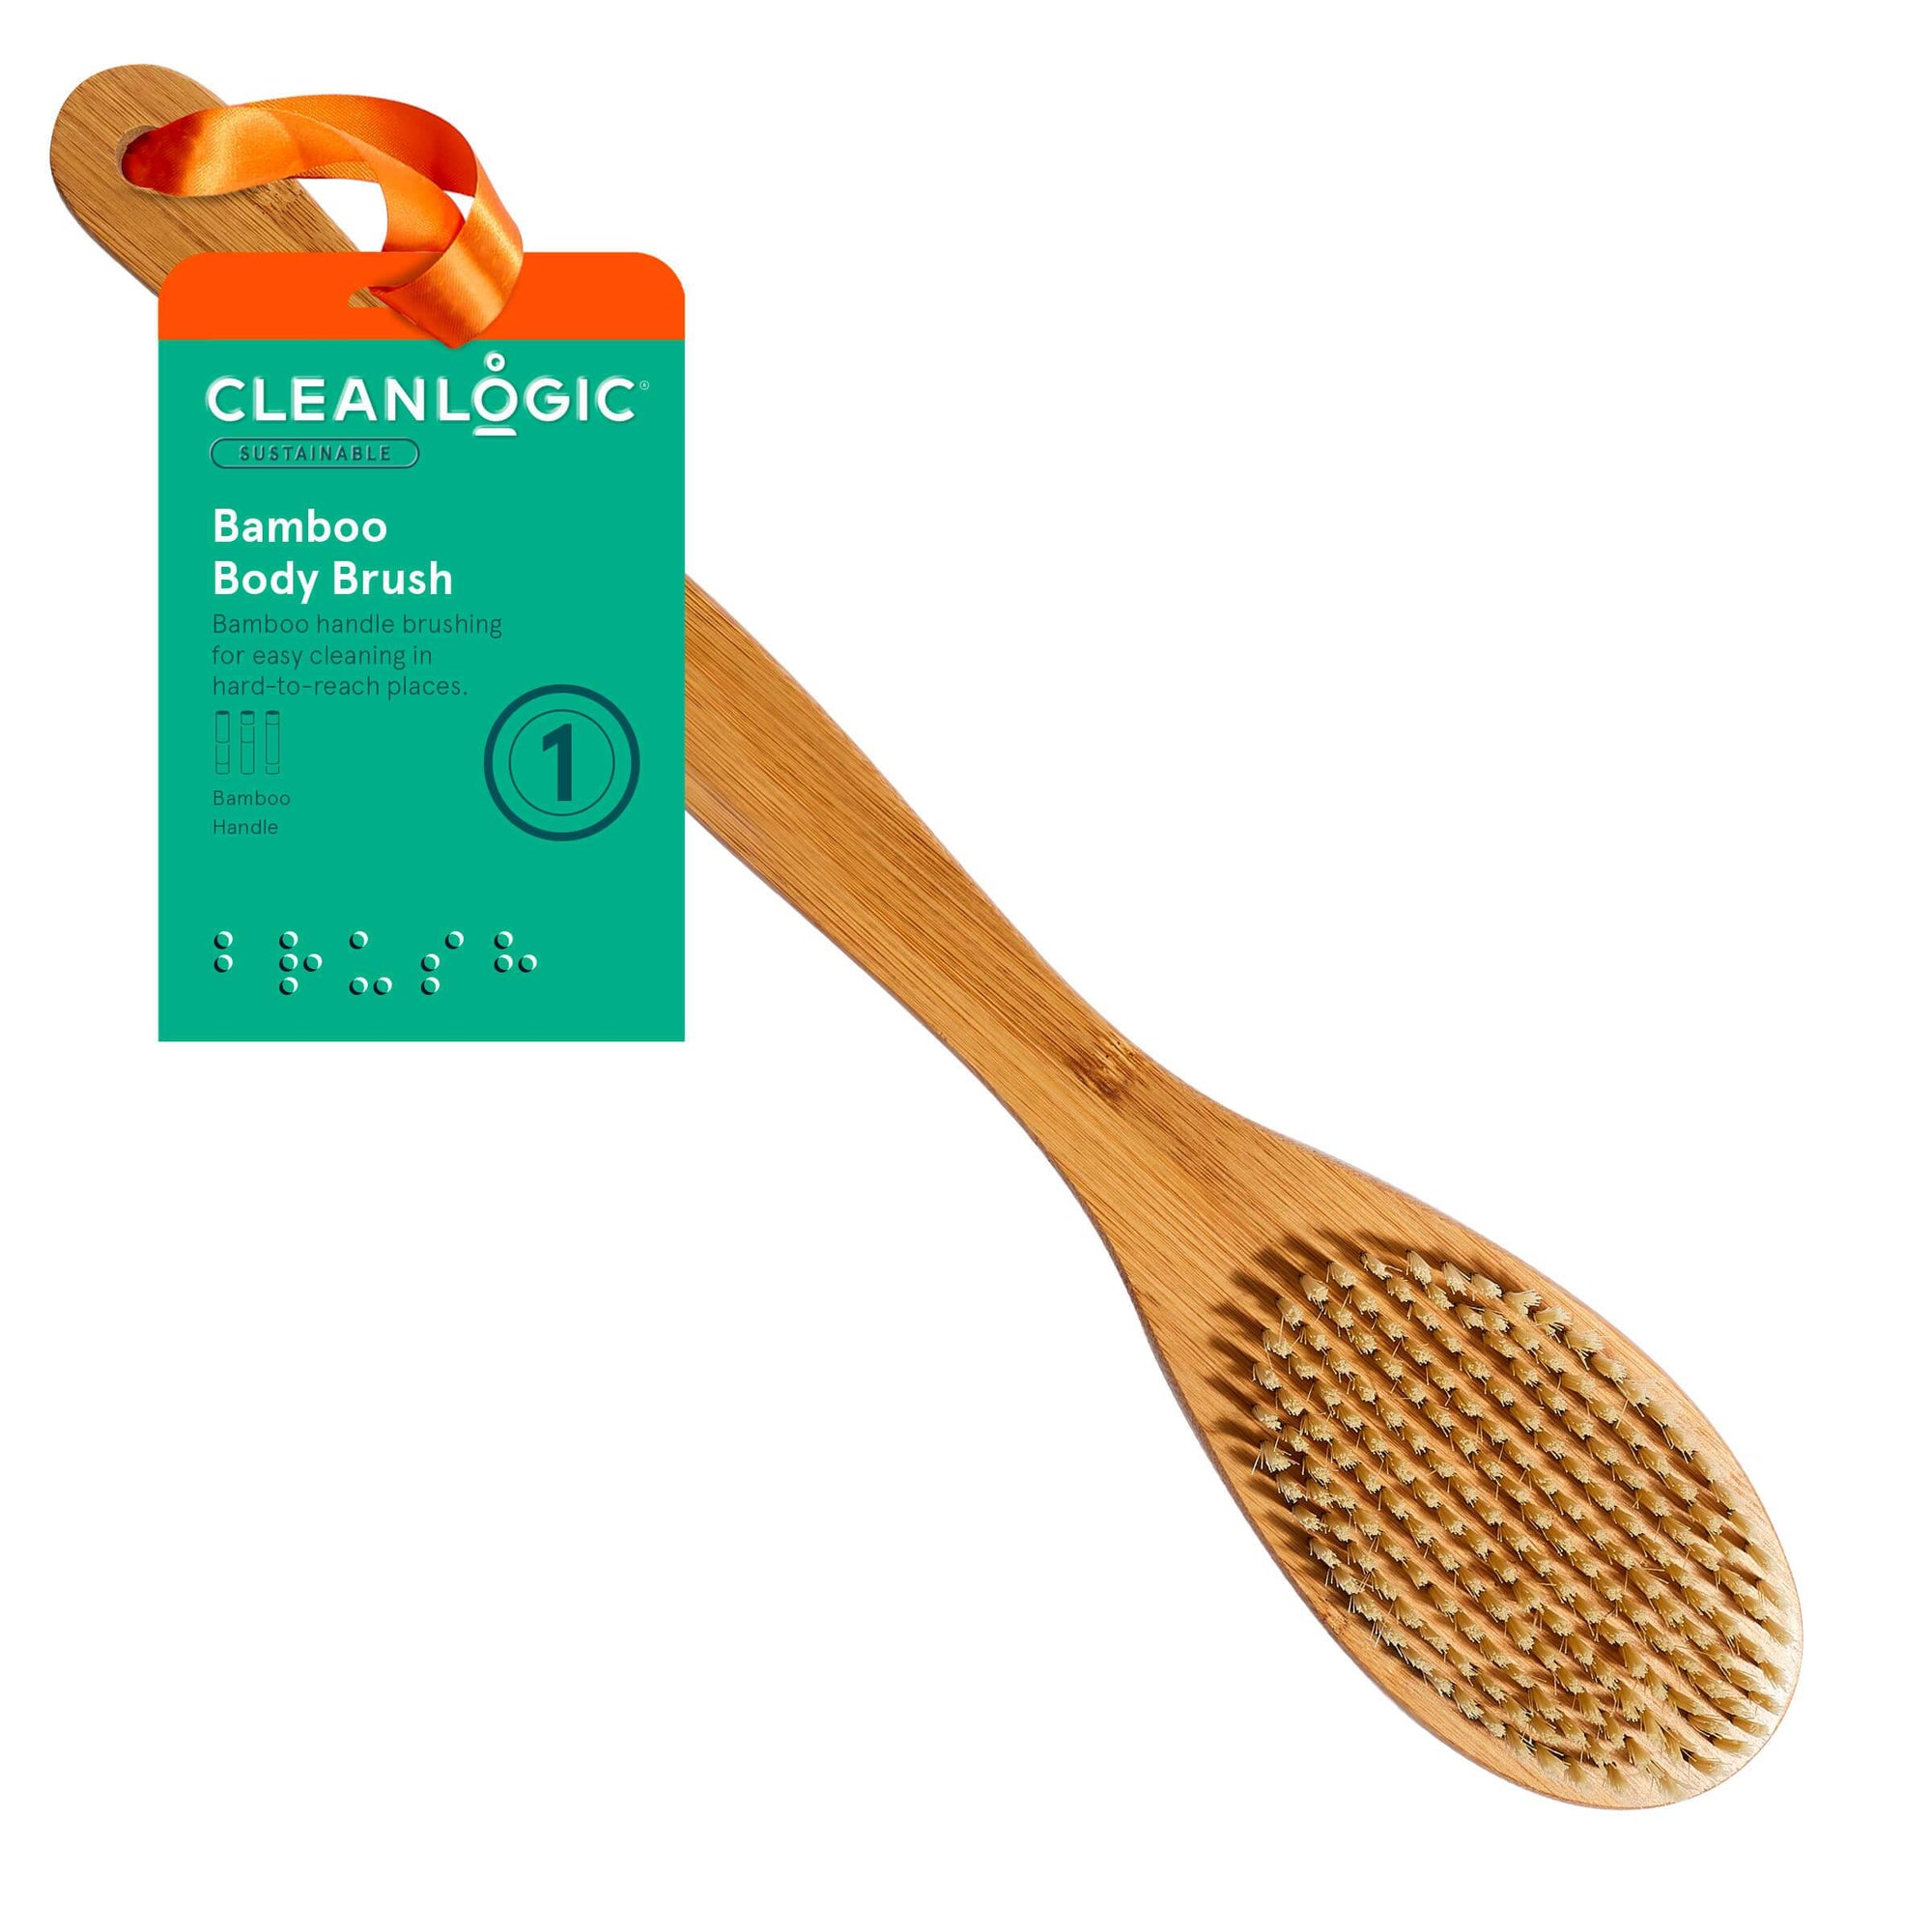 Cleanlogic Bamboo Body Brush